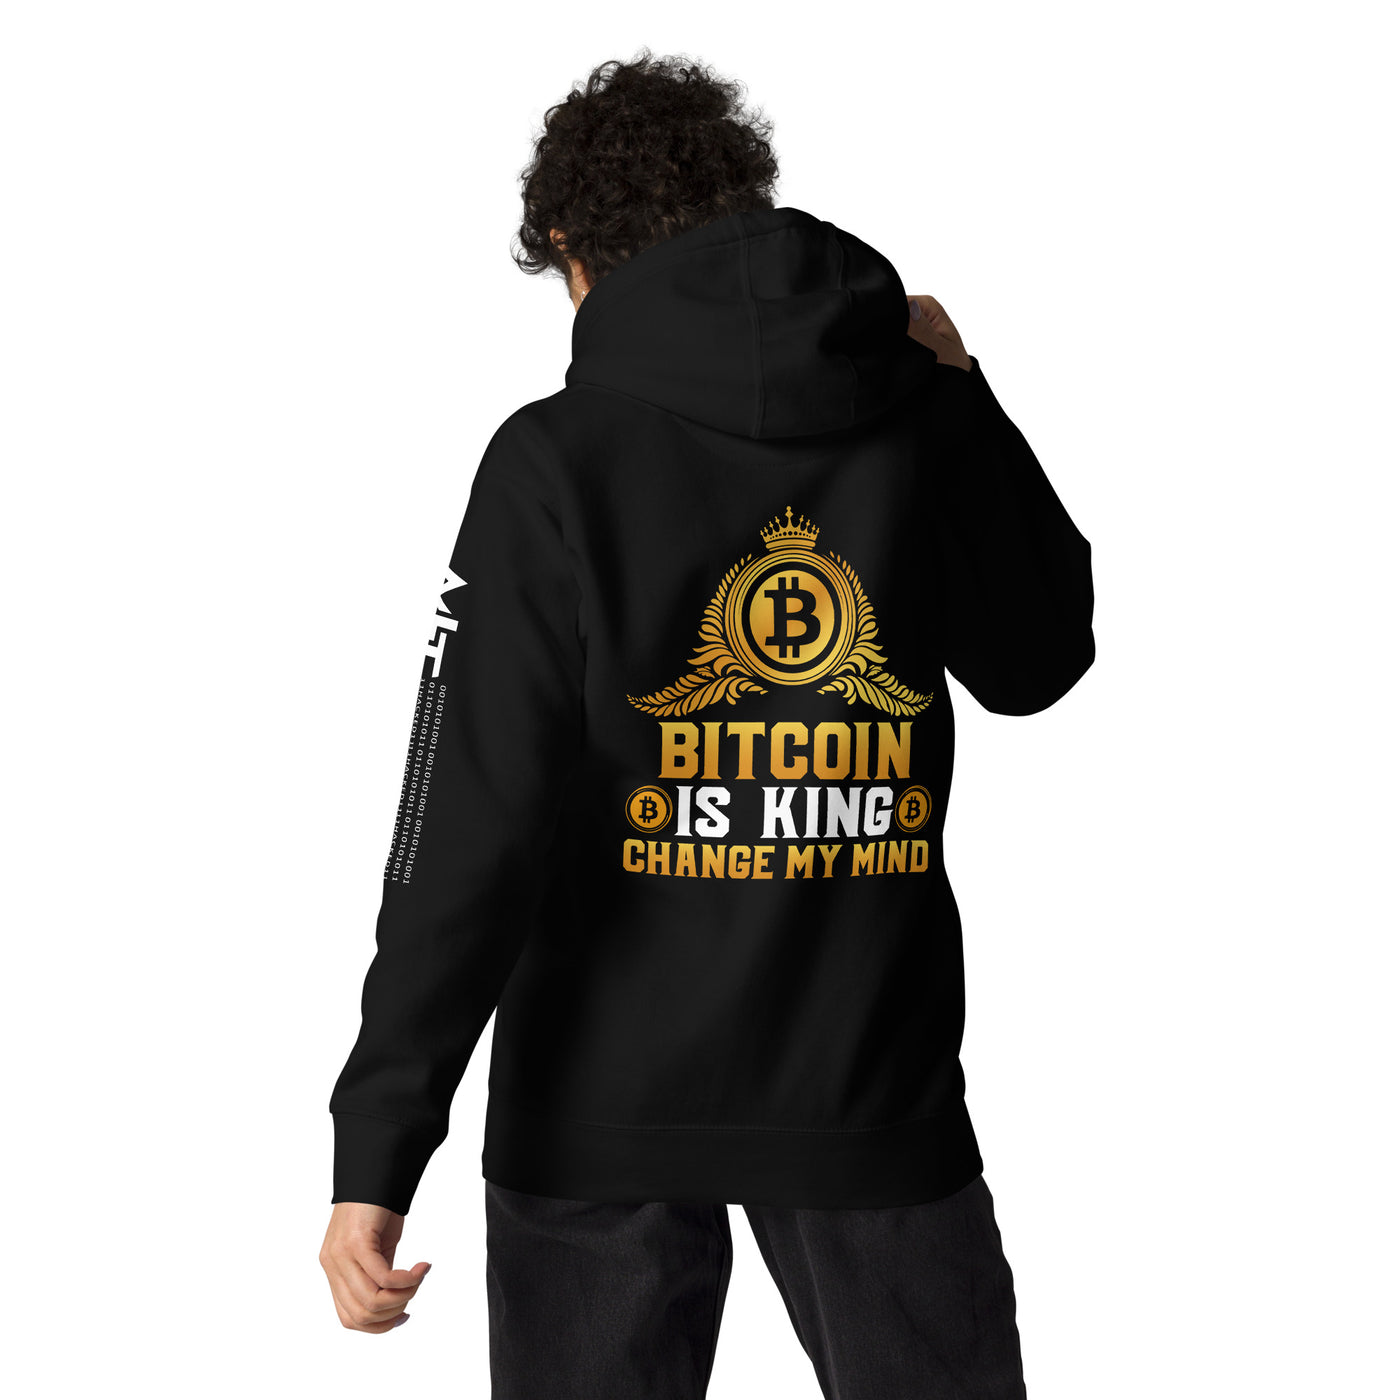 Bitcoin is King: Change my Mind - Unisex Hoodie